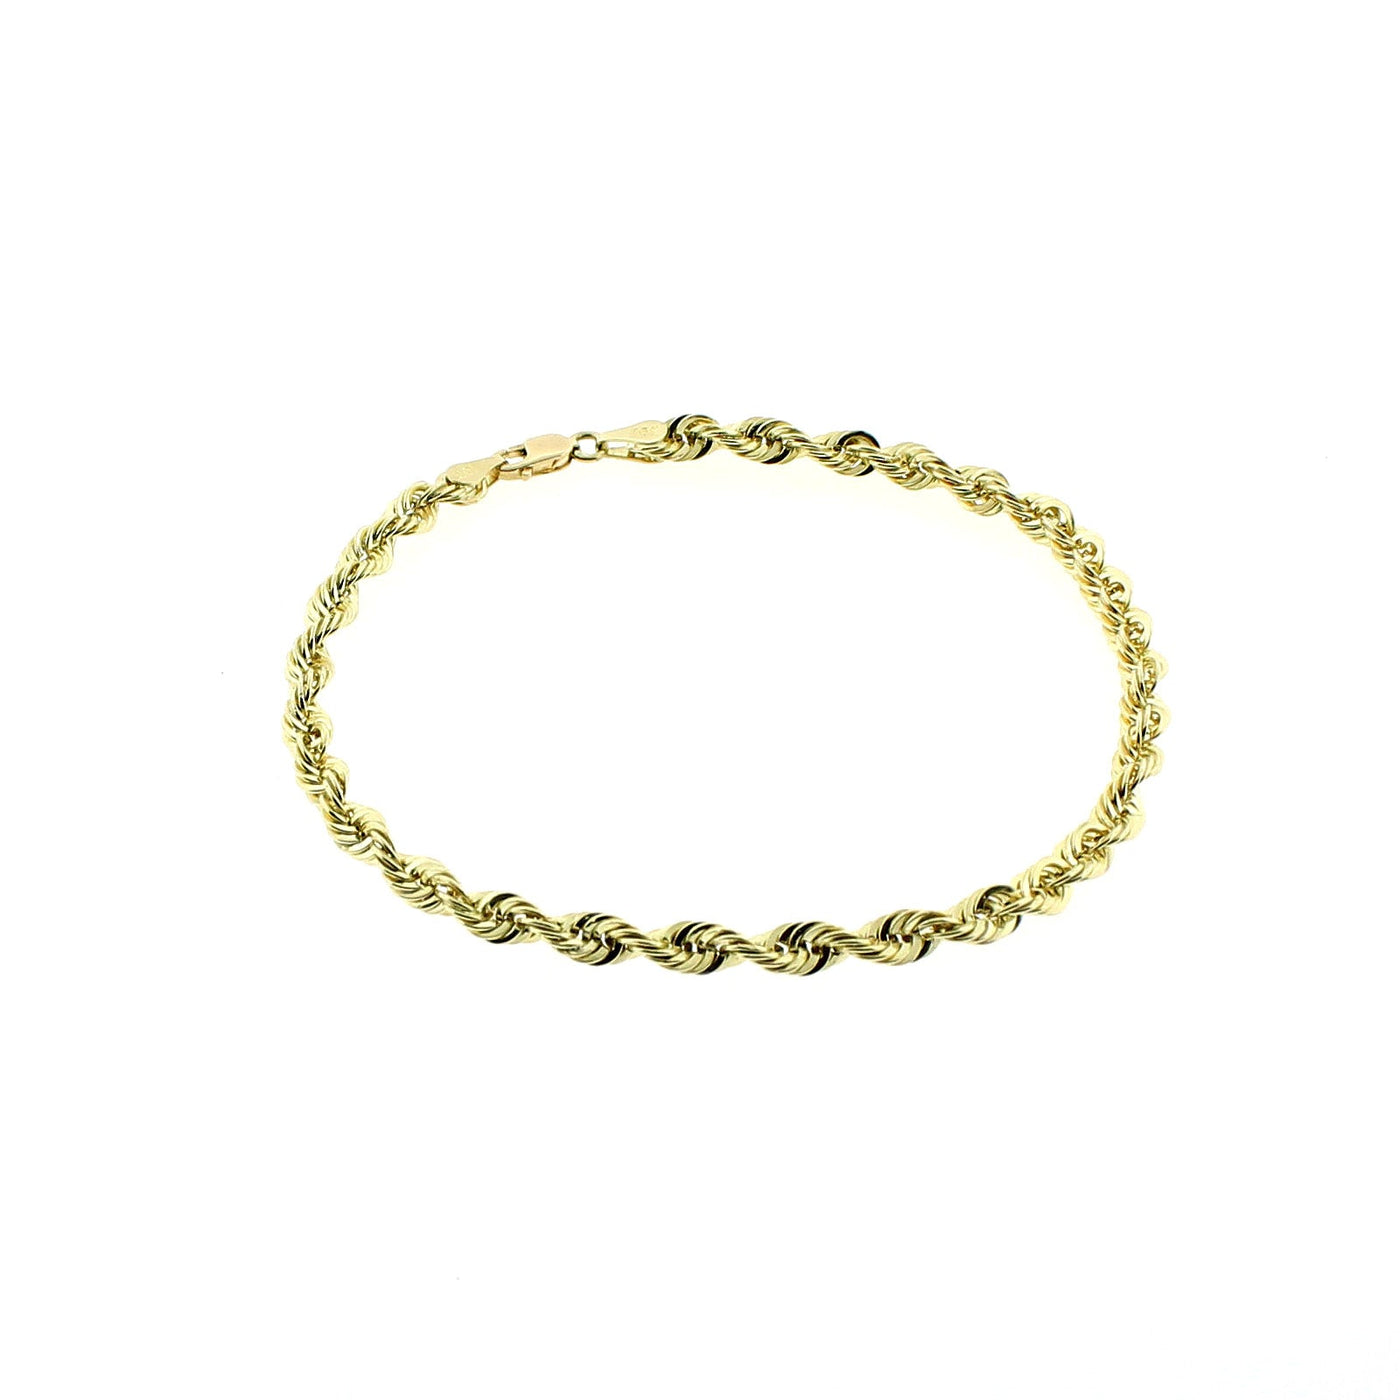 Real 10K Yellow Gold 2mm - 6mm Rope Chain Bracelet Anklet Men Women 7" 8" 9" 10"